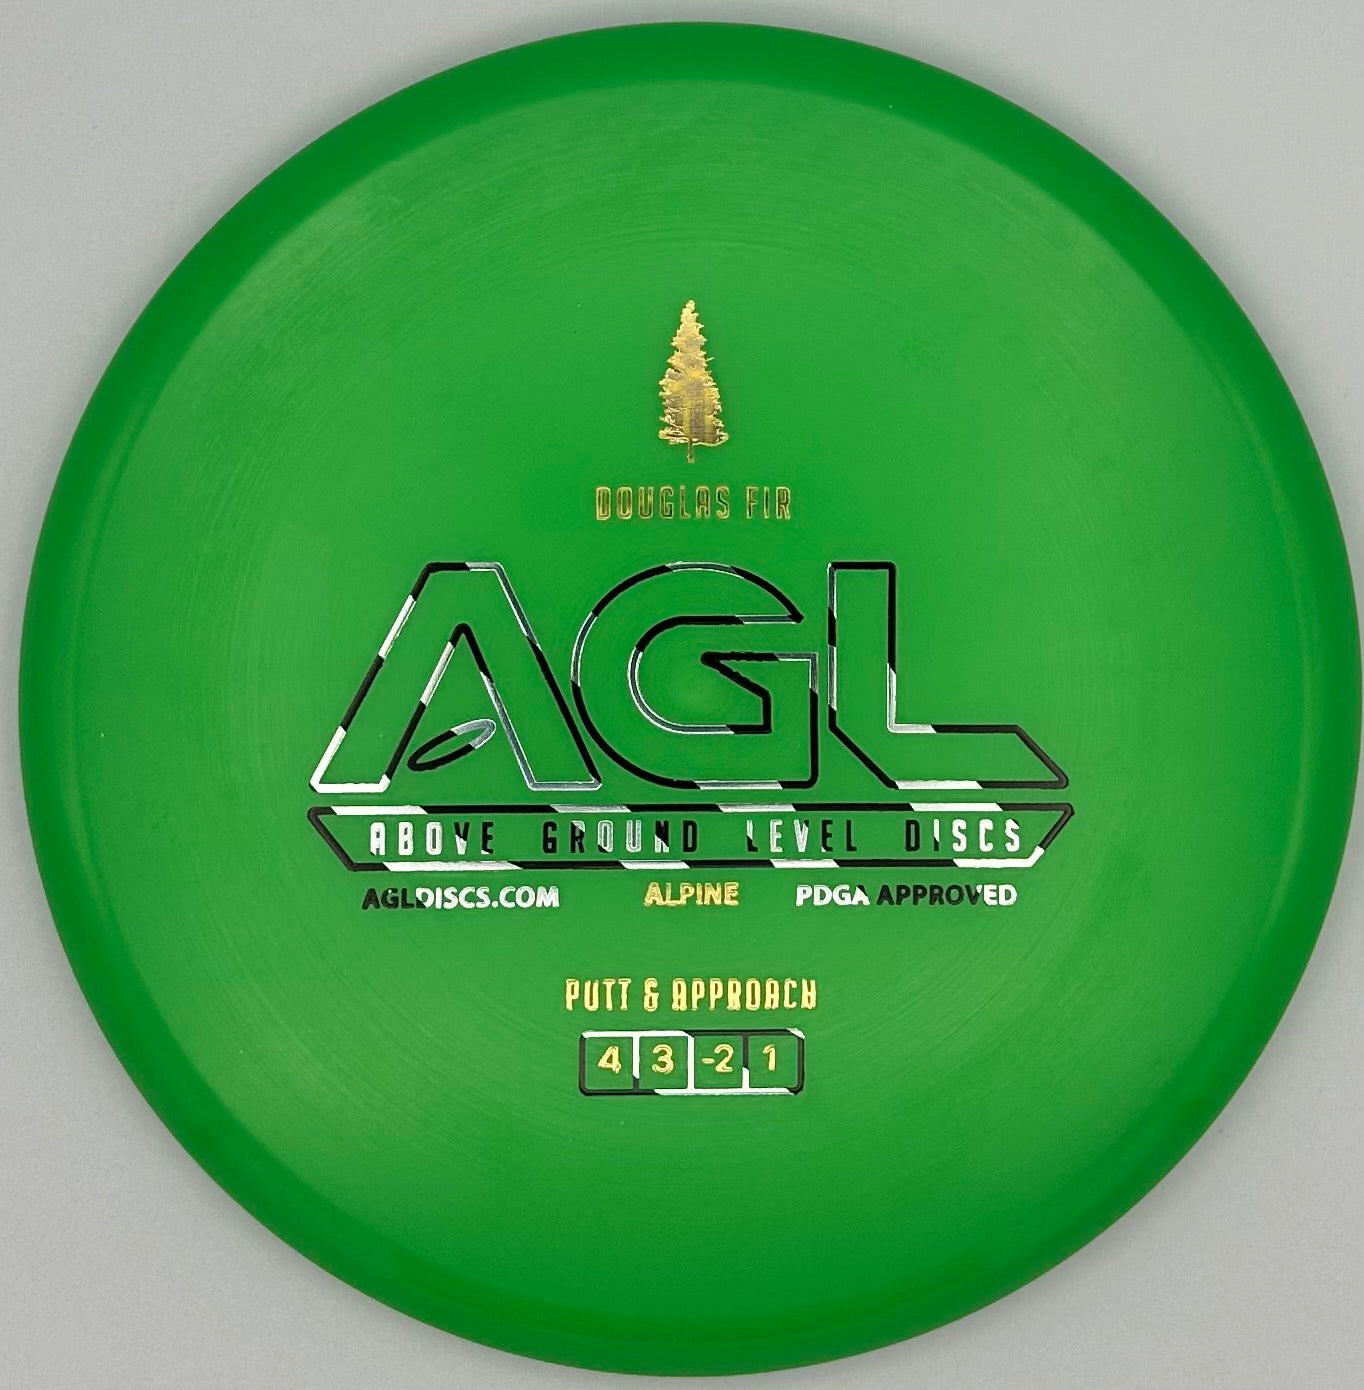 AGL Discs - Putting Green Alpine Douglas Fir (AGL Bar Stamp)